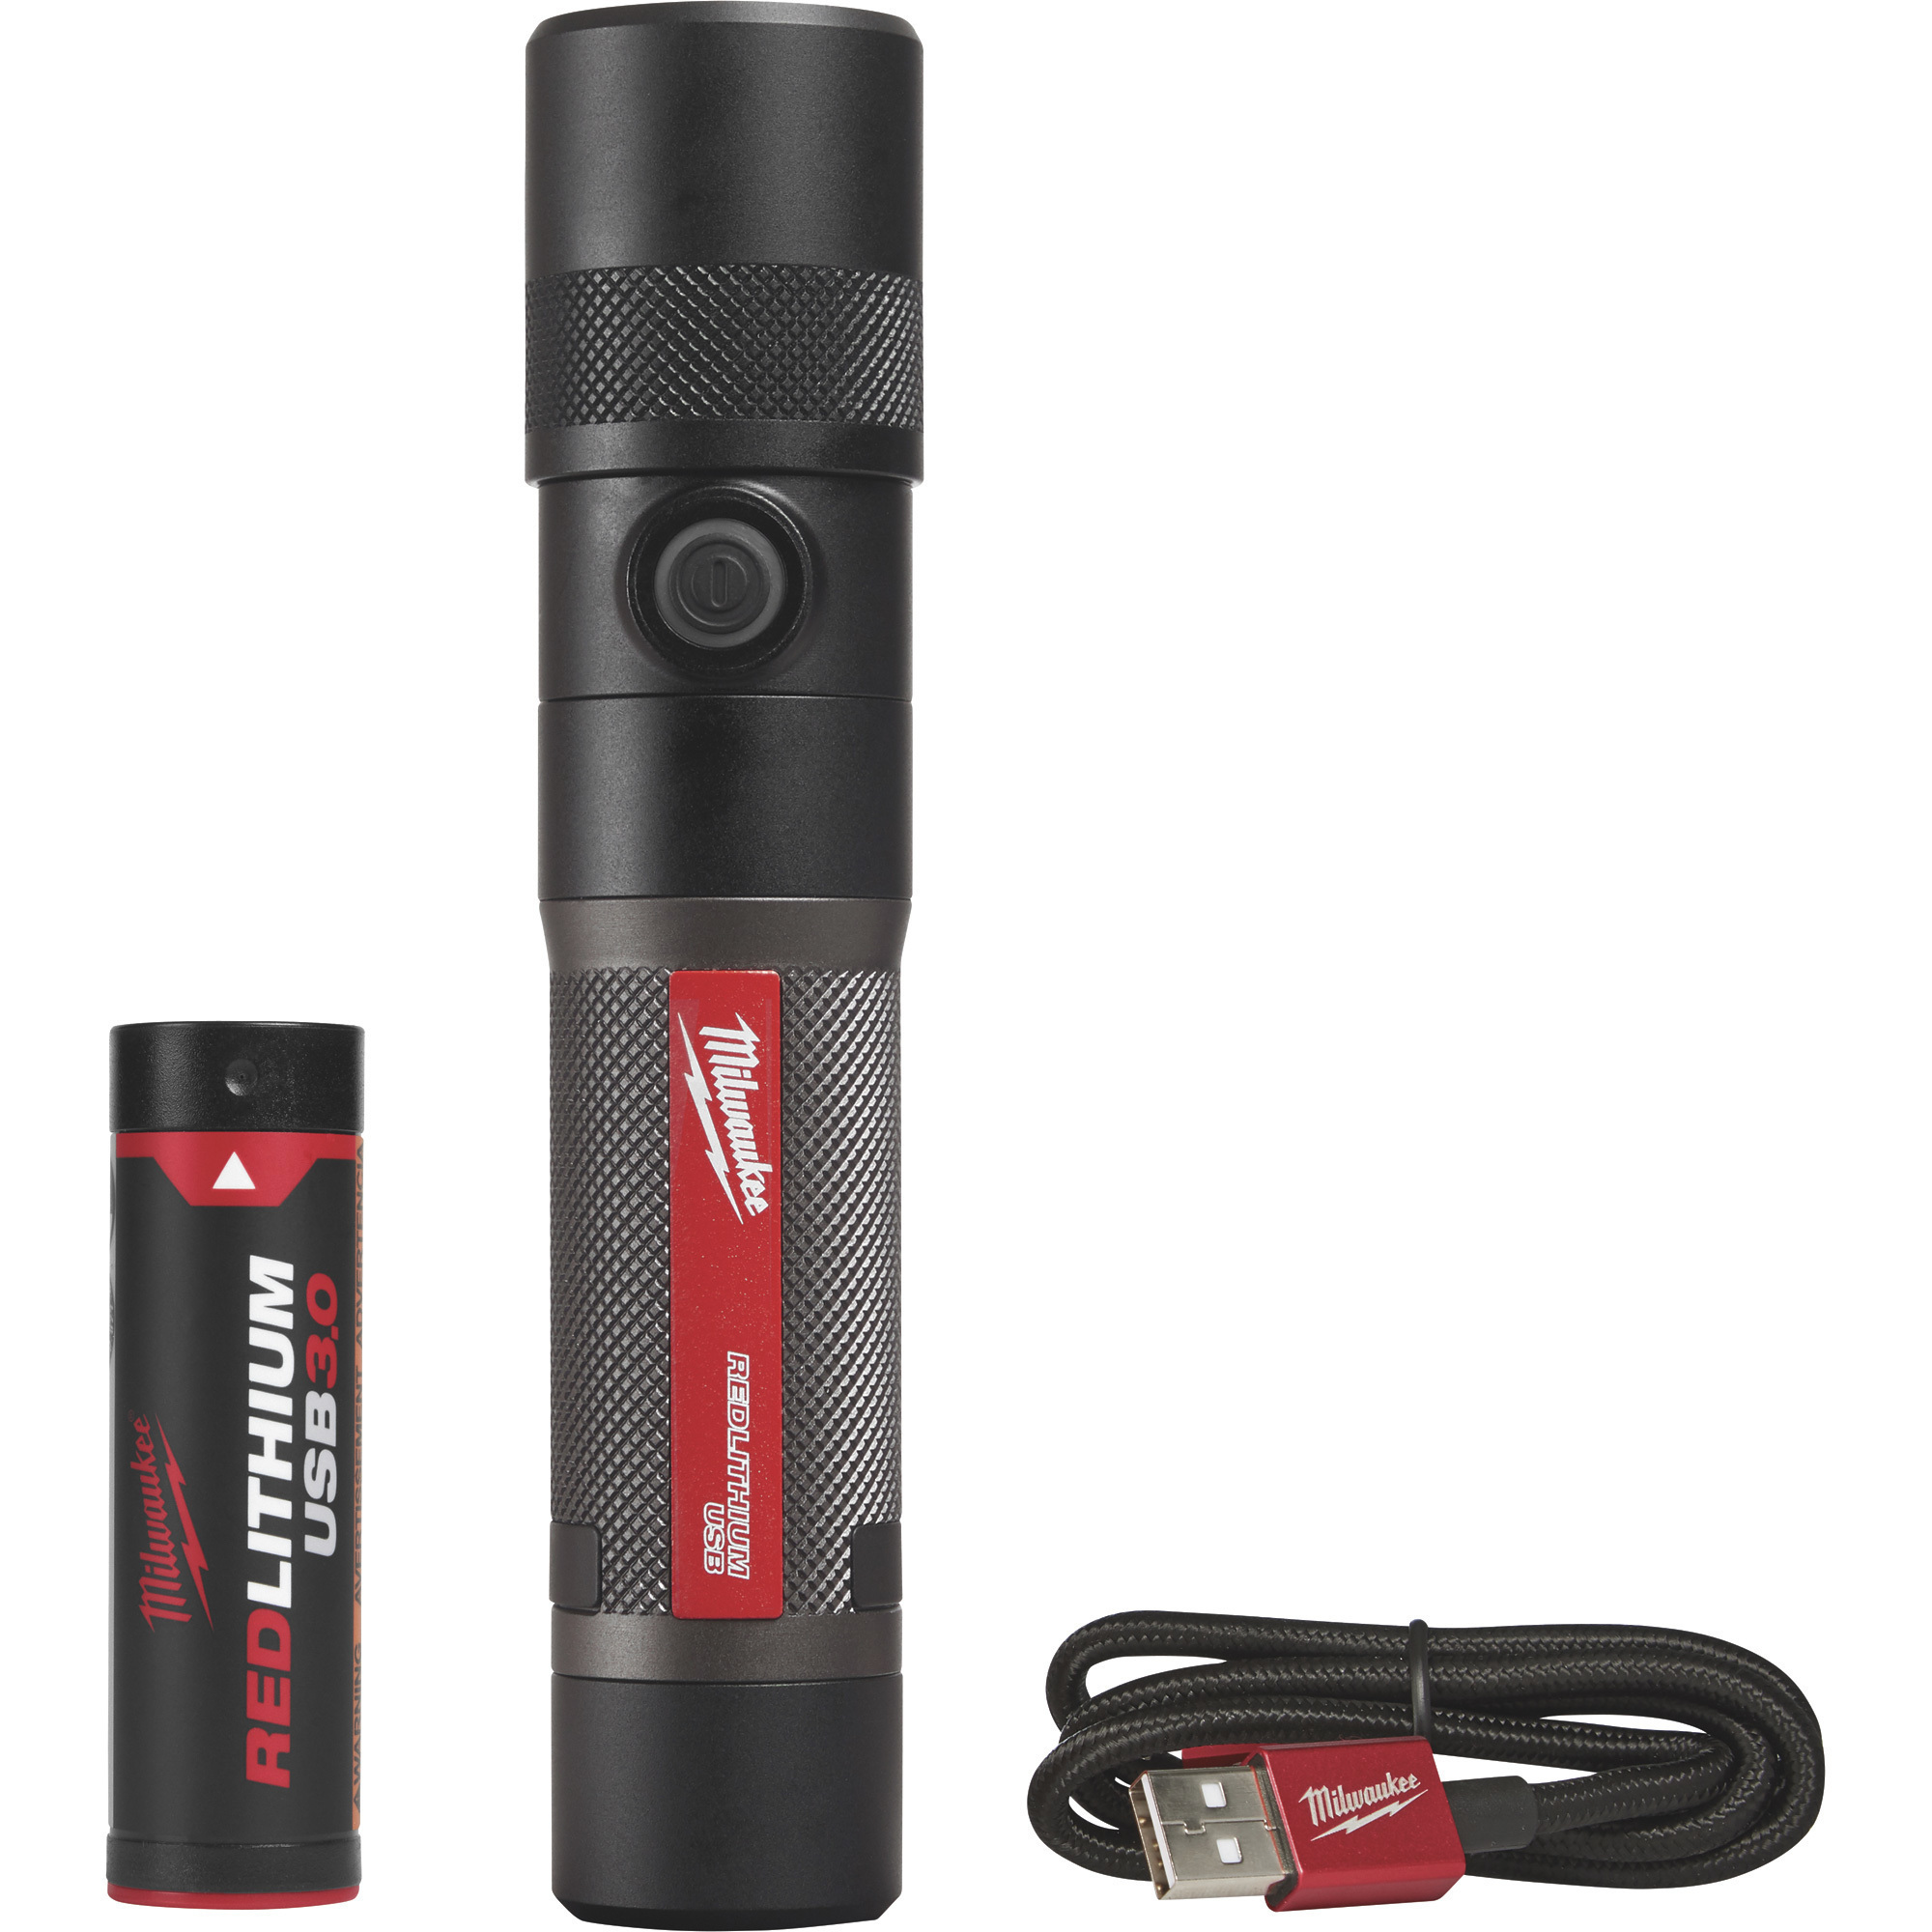 Milwaukee USB Rechargeable Twist-Focus Flashlight,1100 Lumens, Model 2161-21